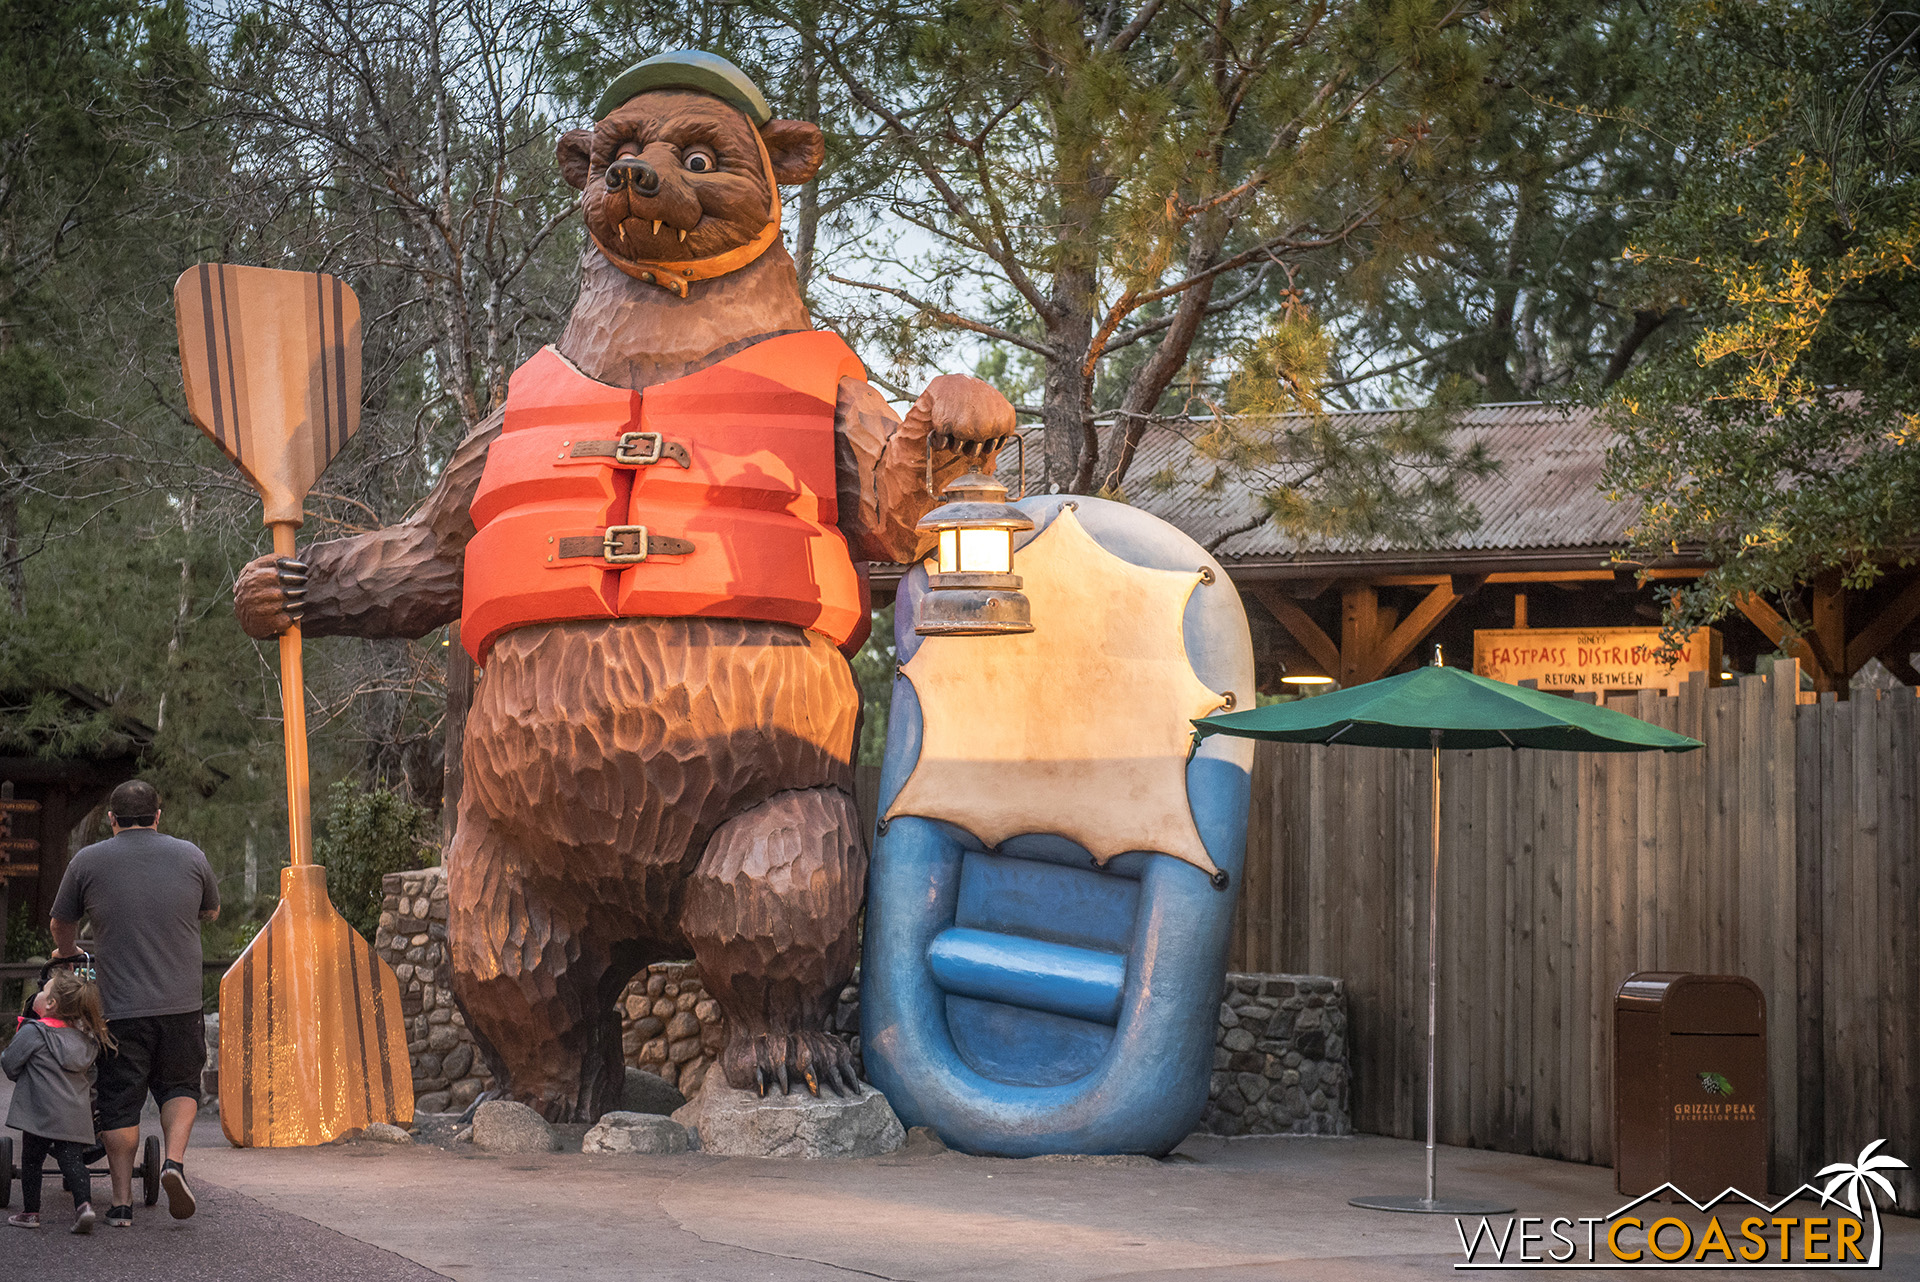  Meanwhile, the bear got a nifty, oranger life vest. 